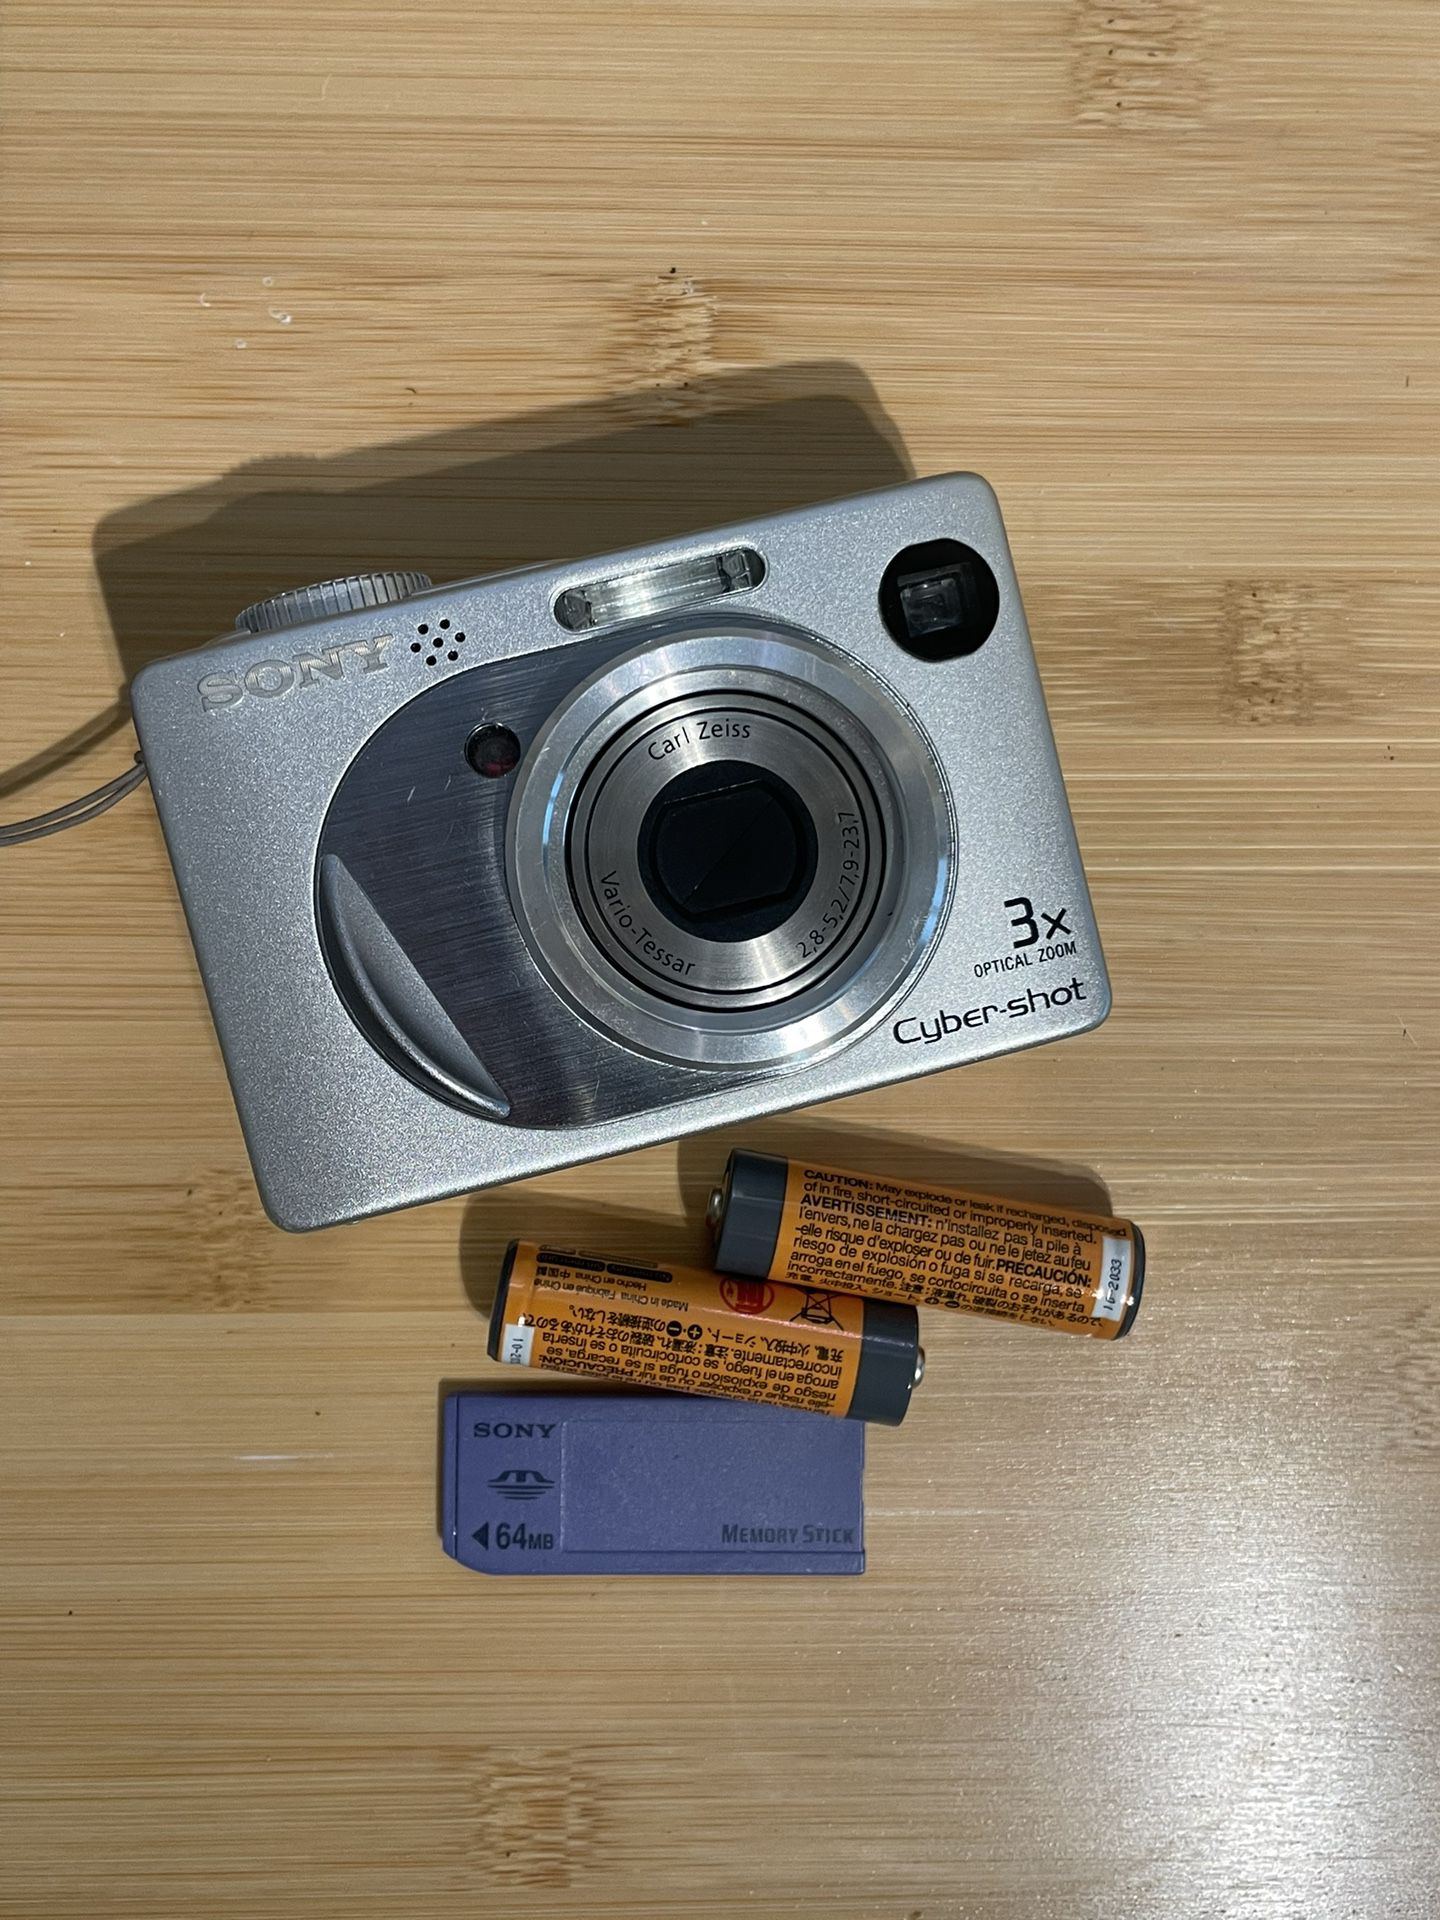 Sony Cybershot DSC-W1 5.1 MP Digital Camera - Tested Works